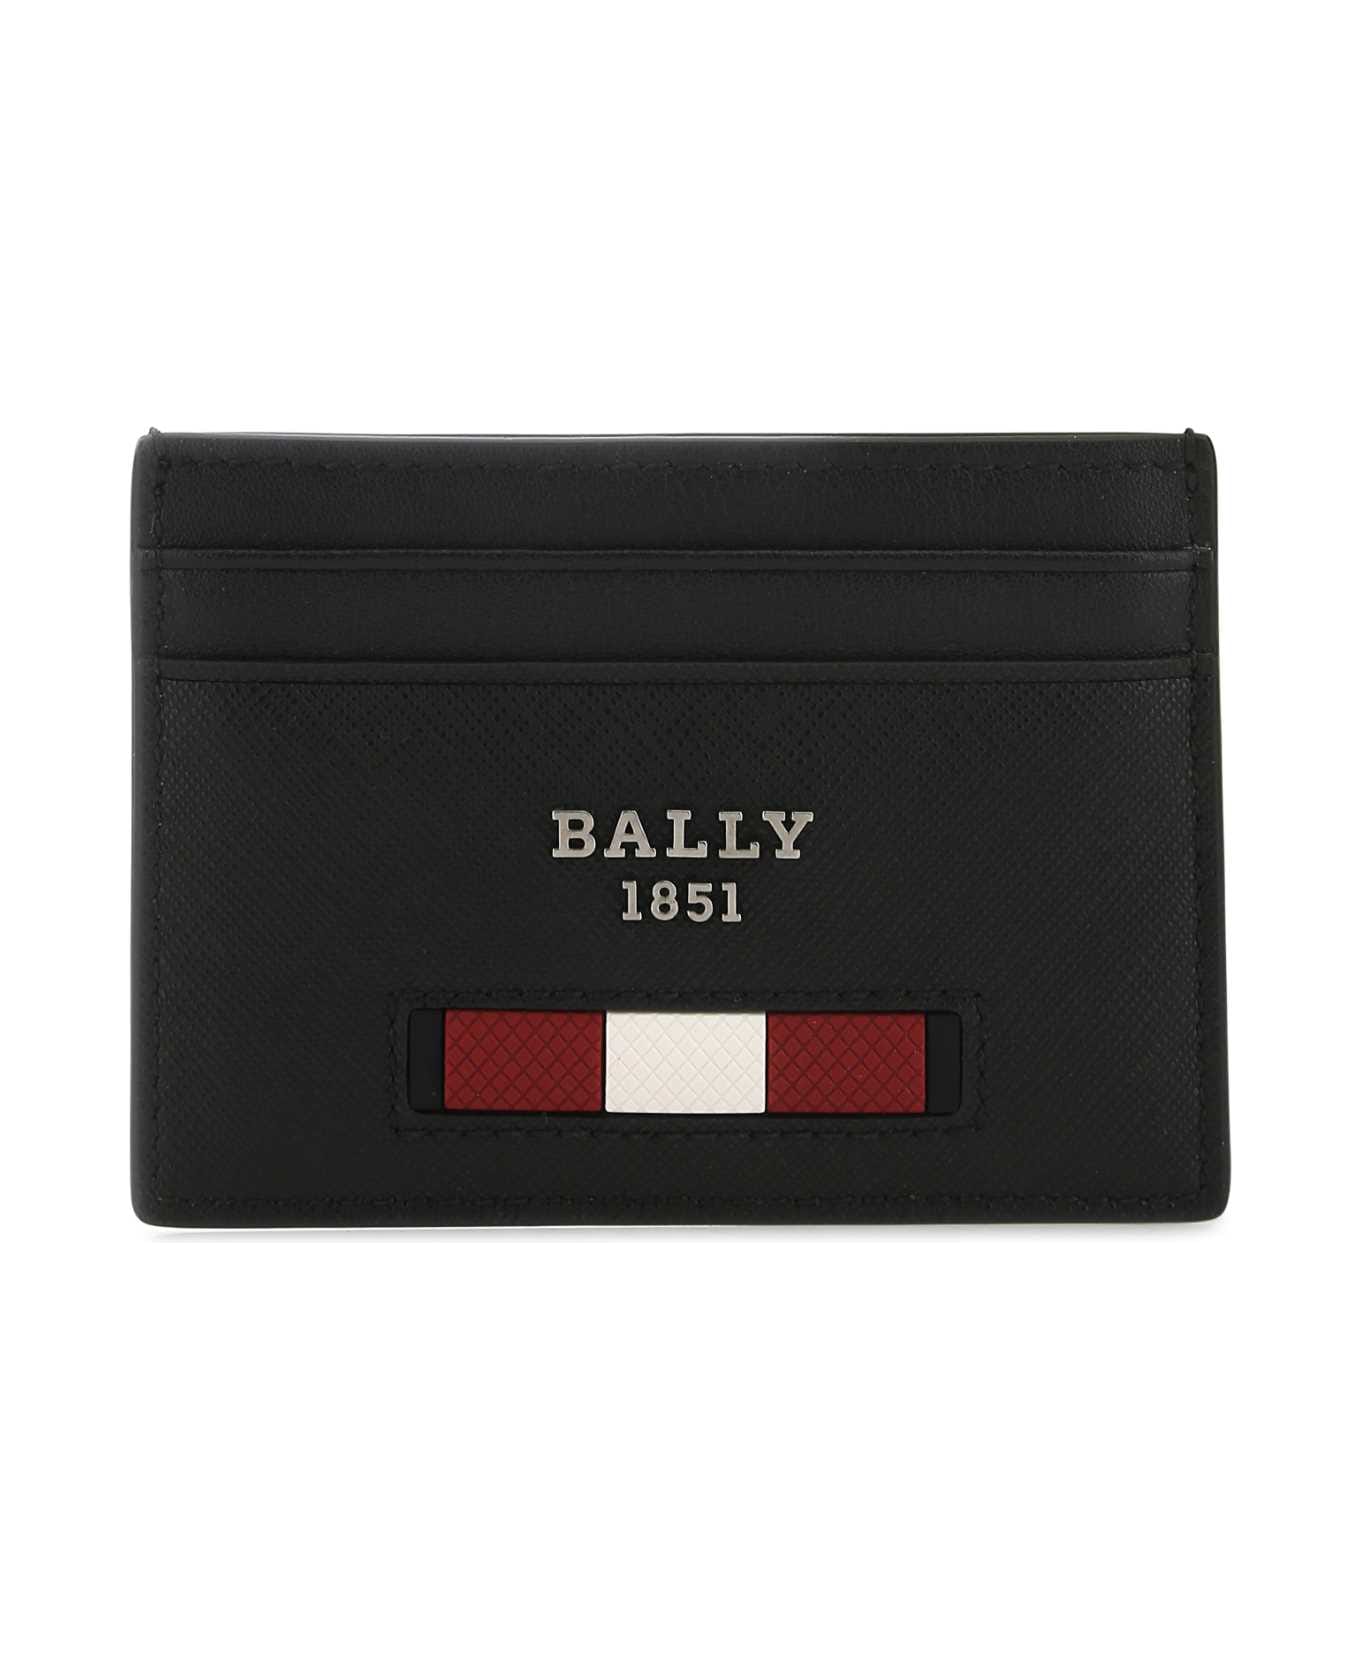 Bally Black Leather Card Holder - Black